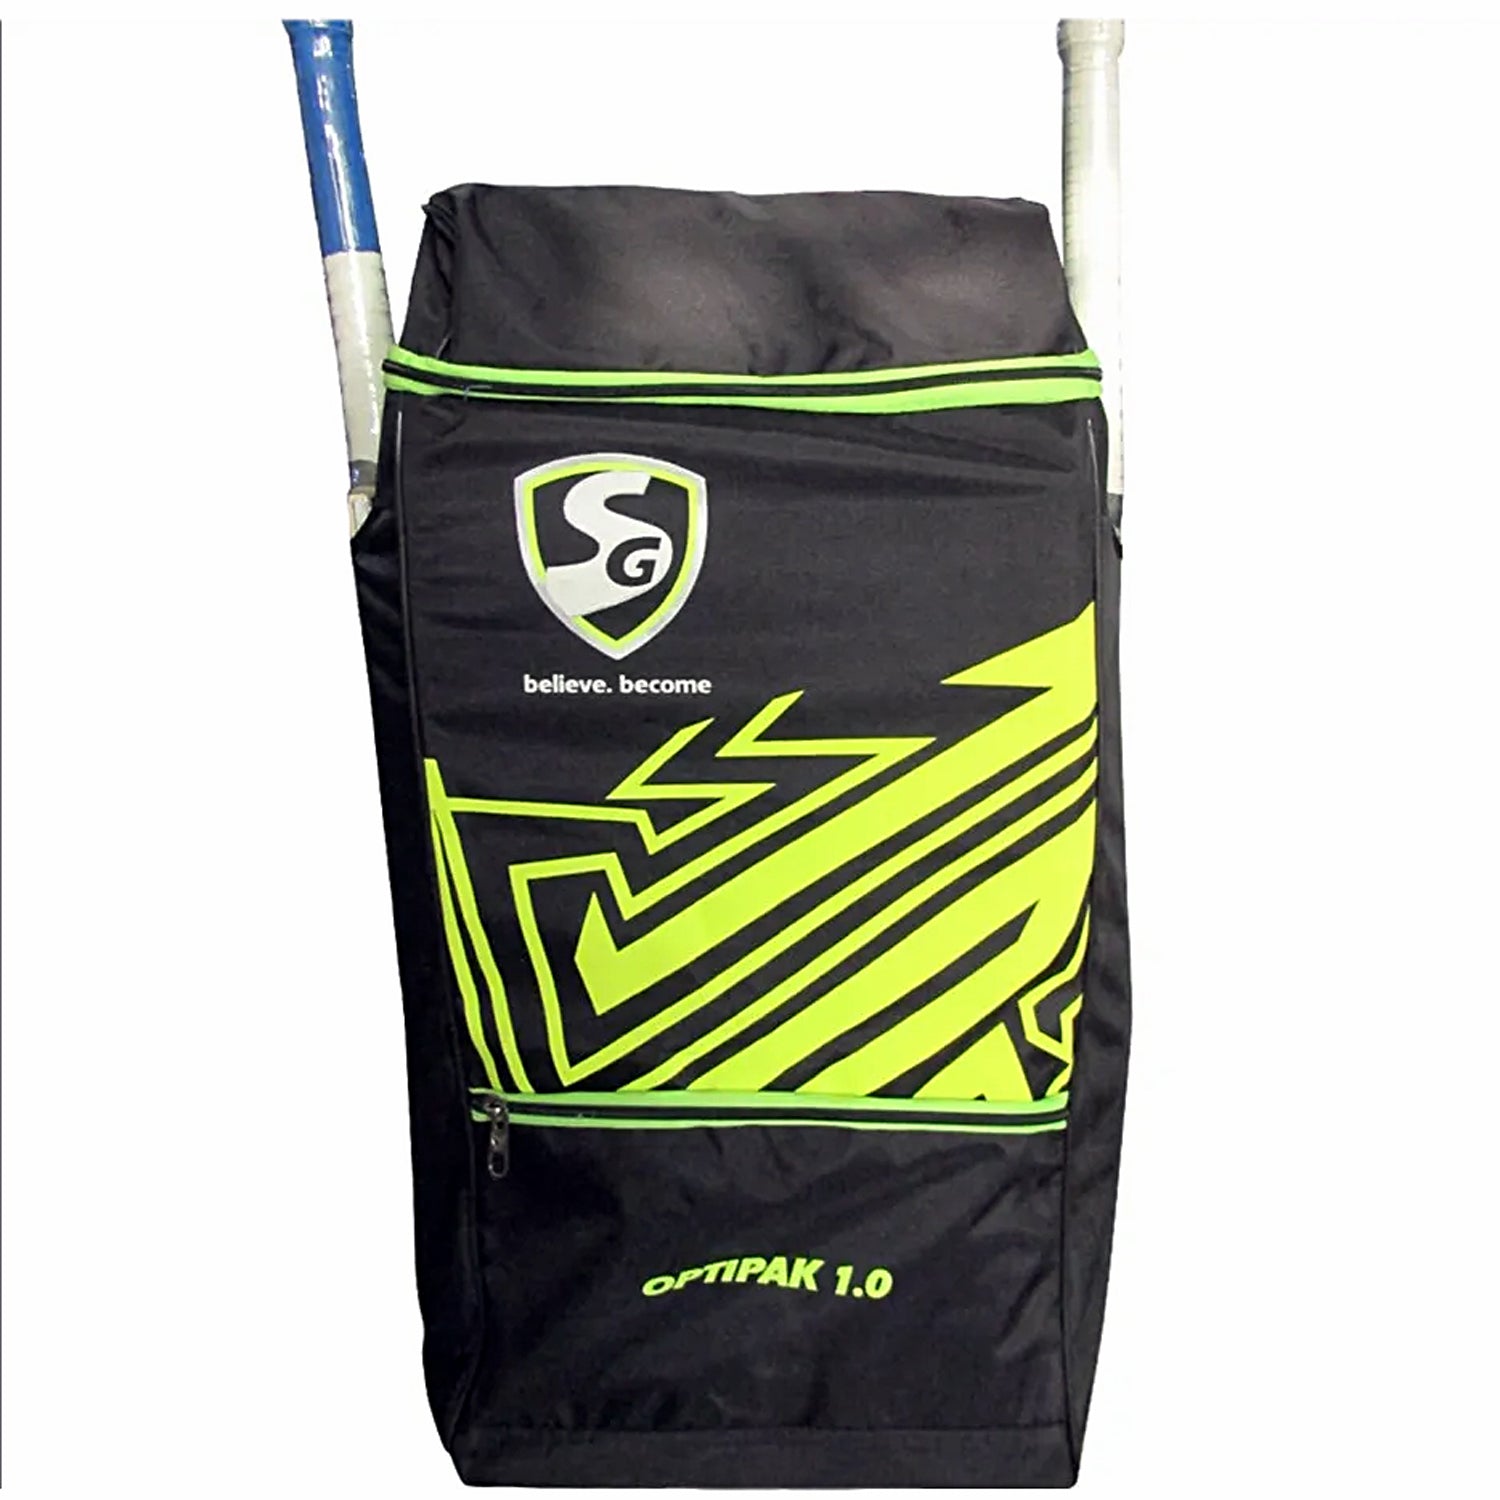 SG Optipak 1.0 Duffle Cricket Kitbag, Large - Best Price online Prokicksports.com